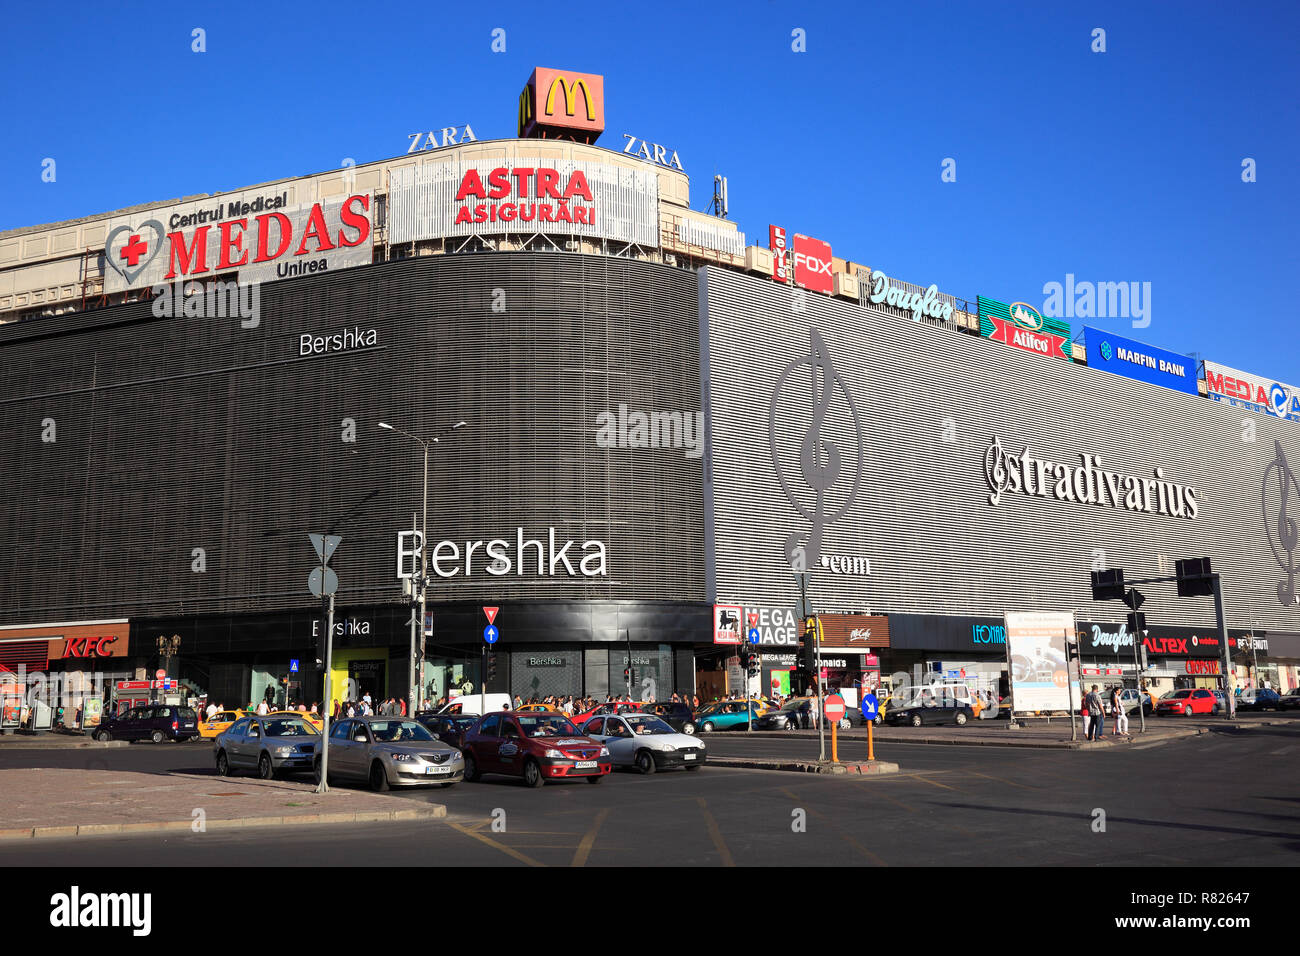 Bershka hi-res stock photography and images - Alamy